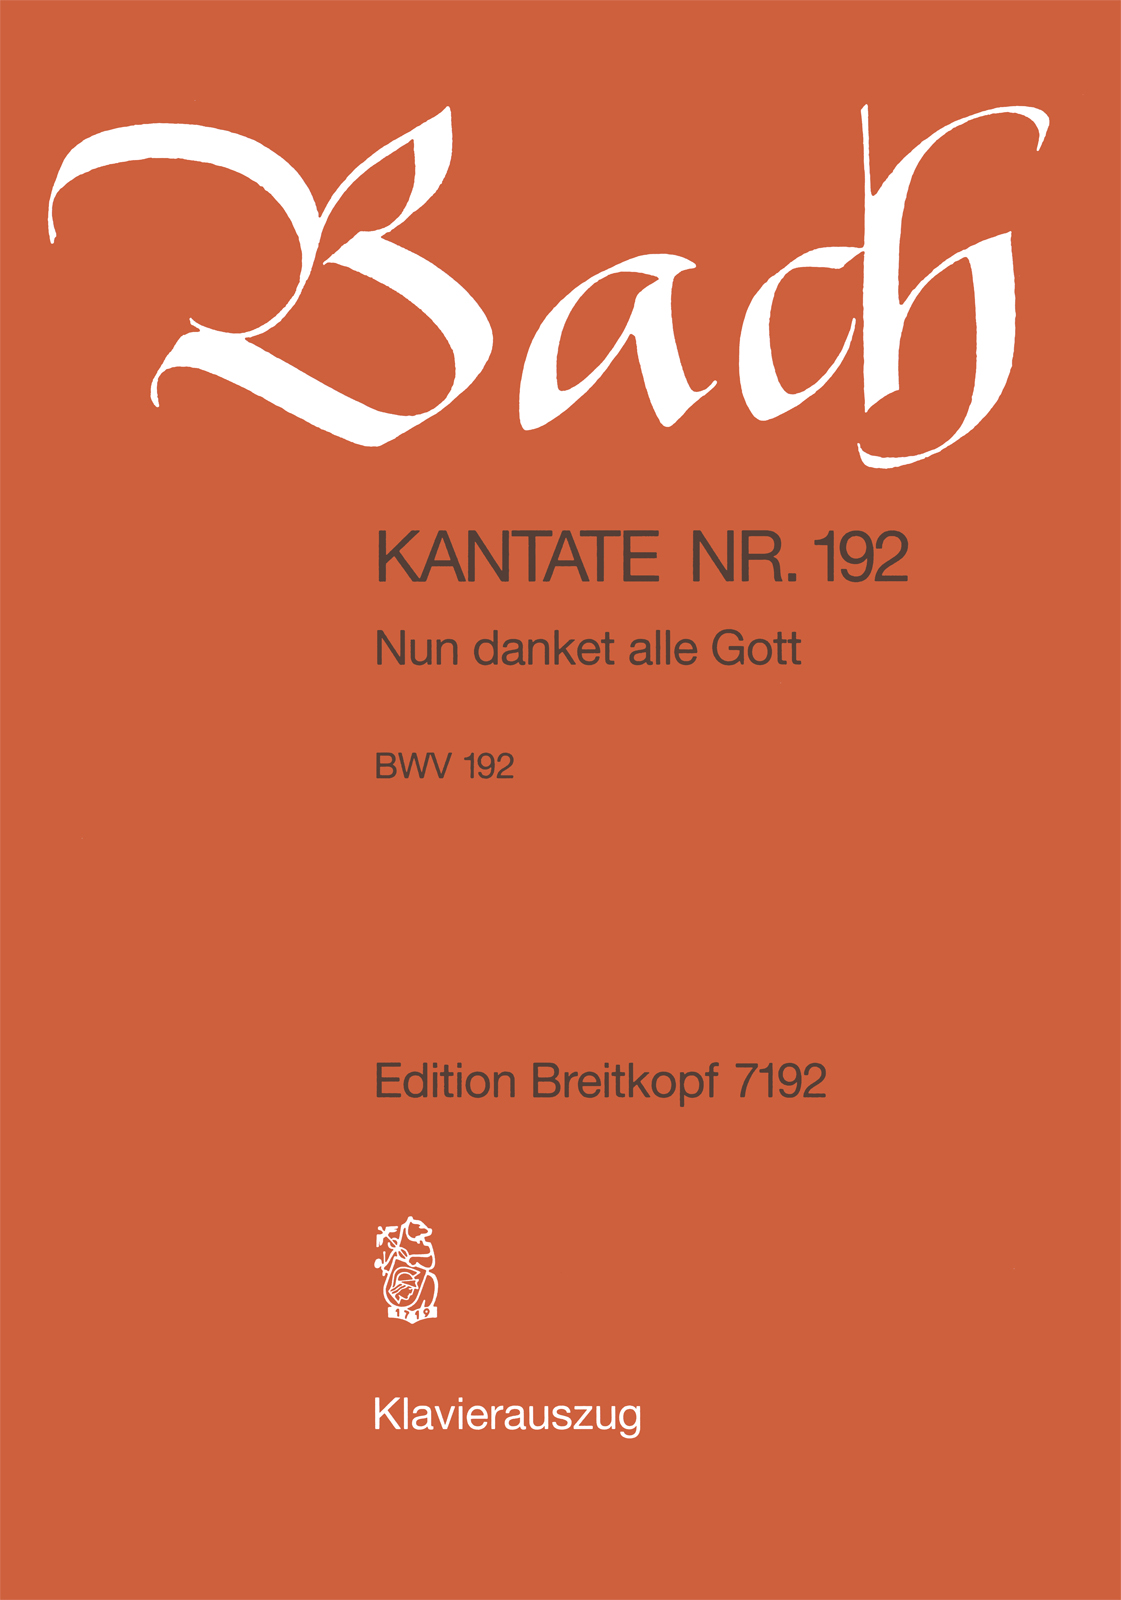 J. S. Bach - KANTATE BWV 192 NUN DANKET ALLE GOTT, KLAVIERAUSZUG